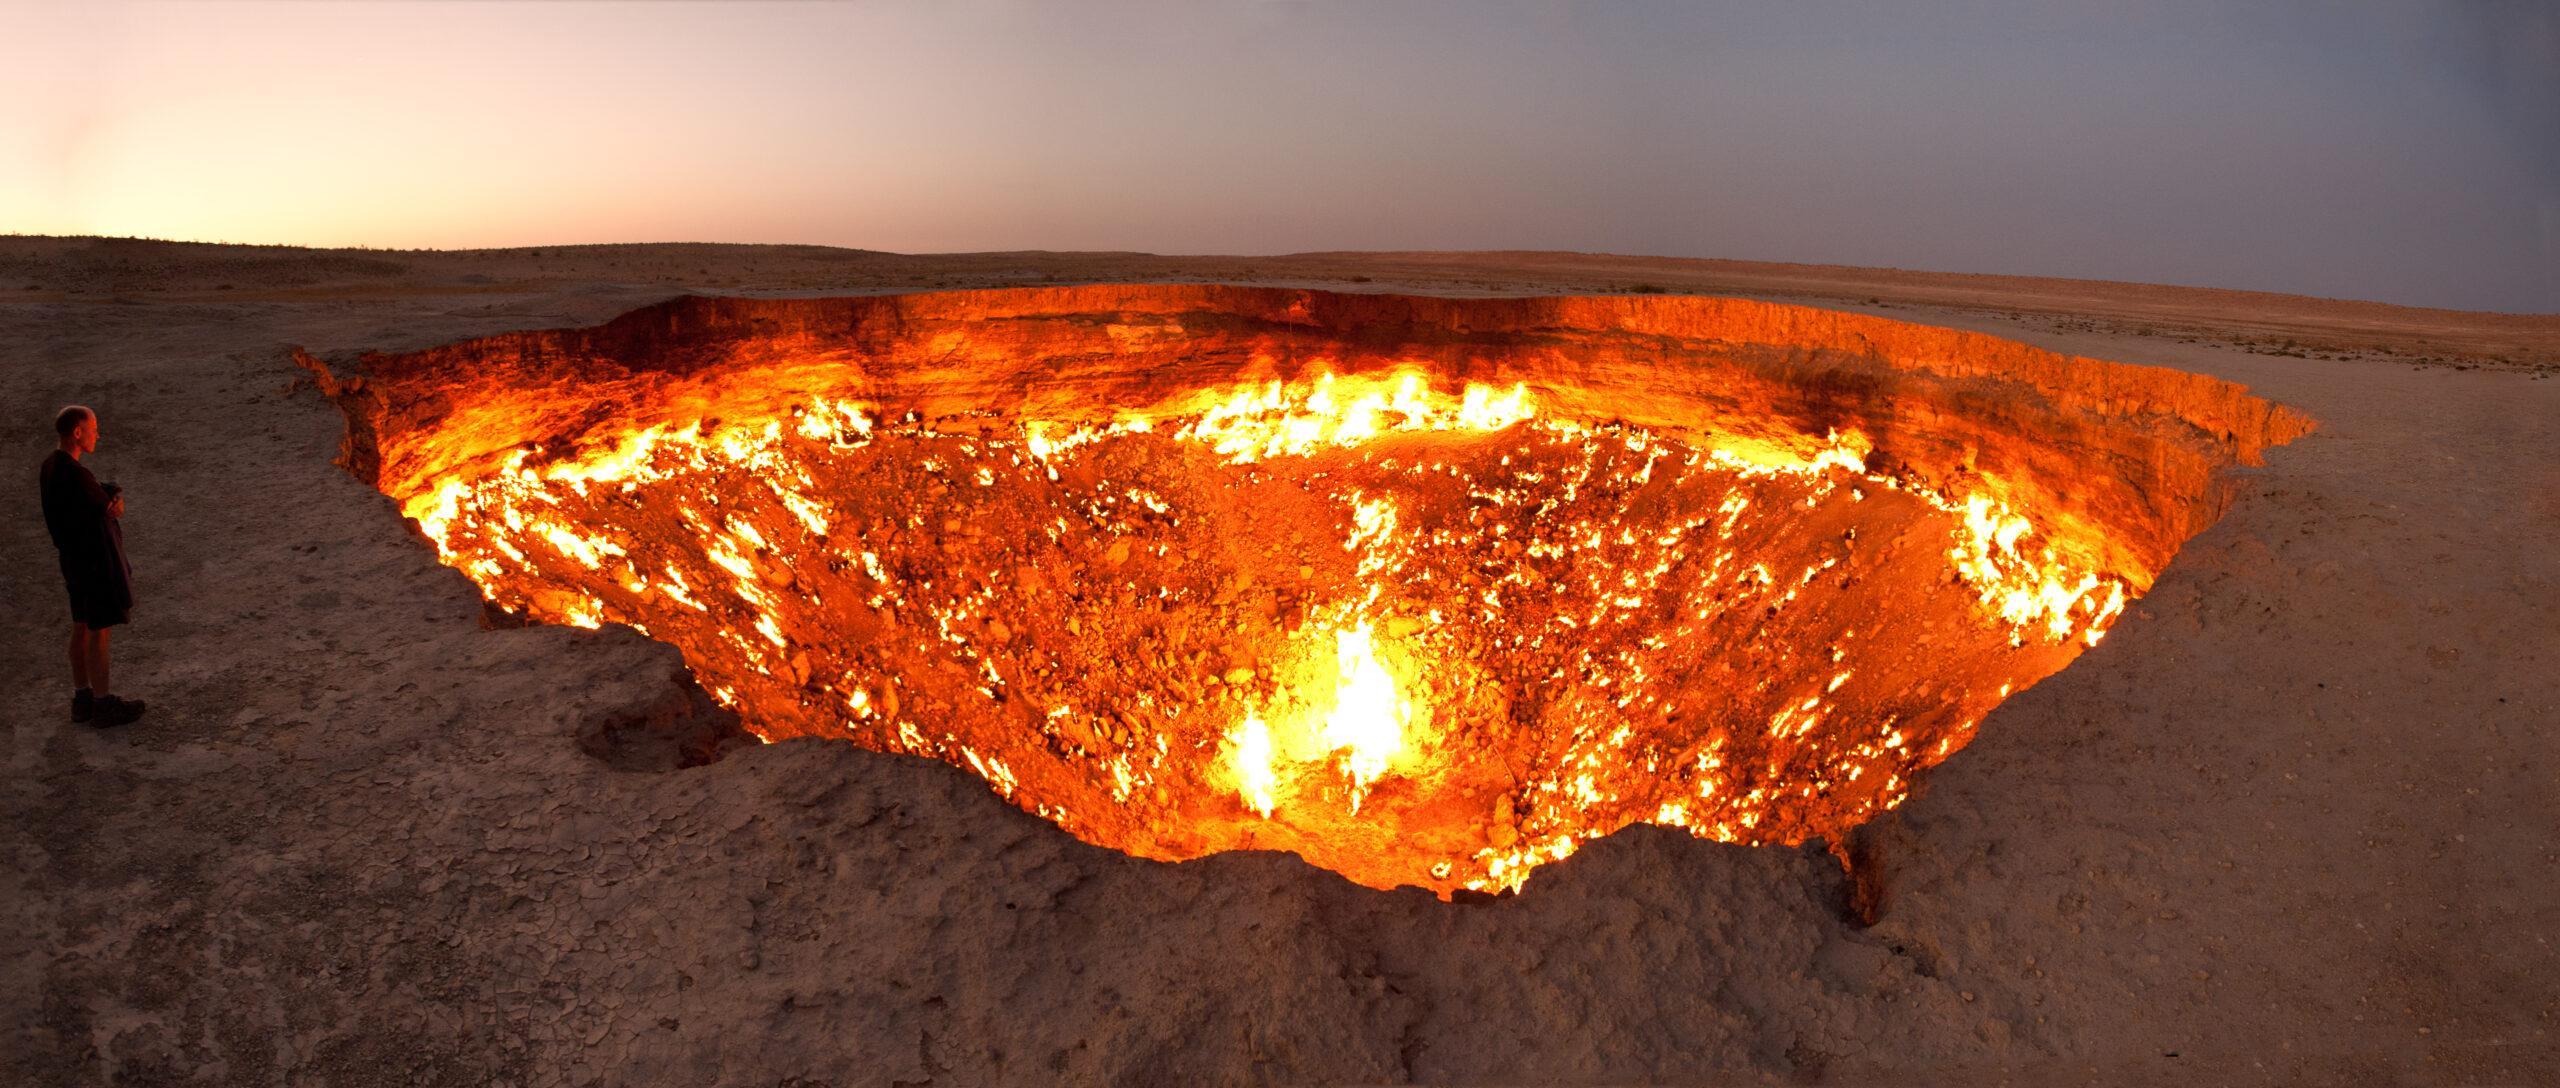 Darvasa gas crater panorama scaled 10 مکان اعجاب انگیز